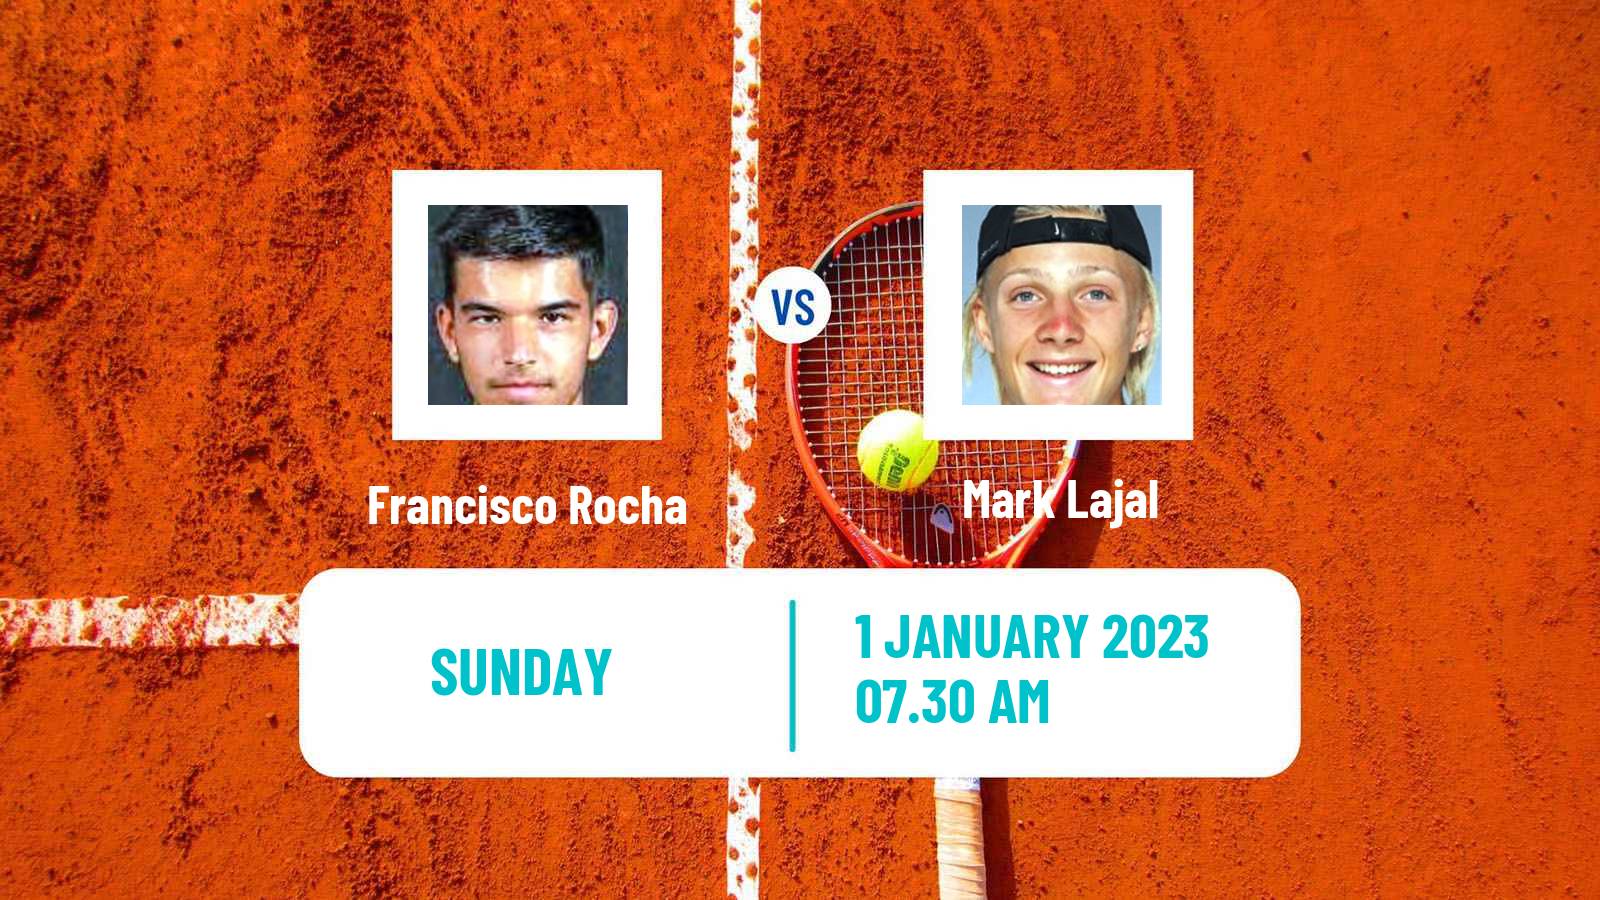 Tennis ATP Challenger Francisco Rocha - Mark Lajal